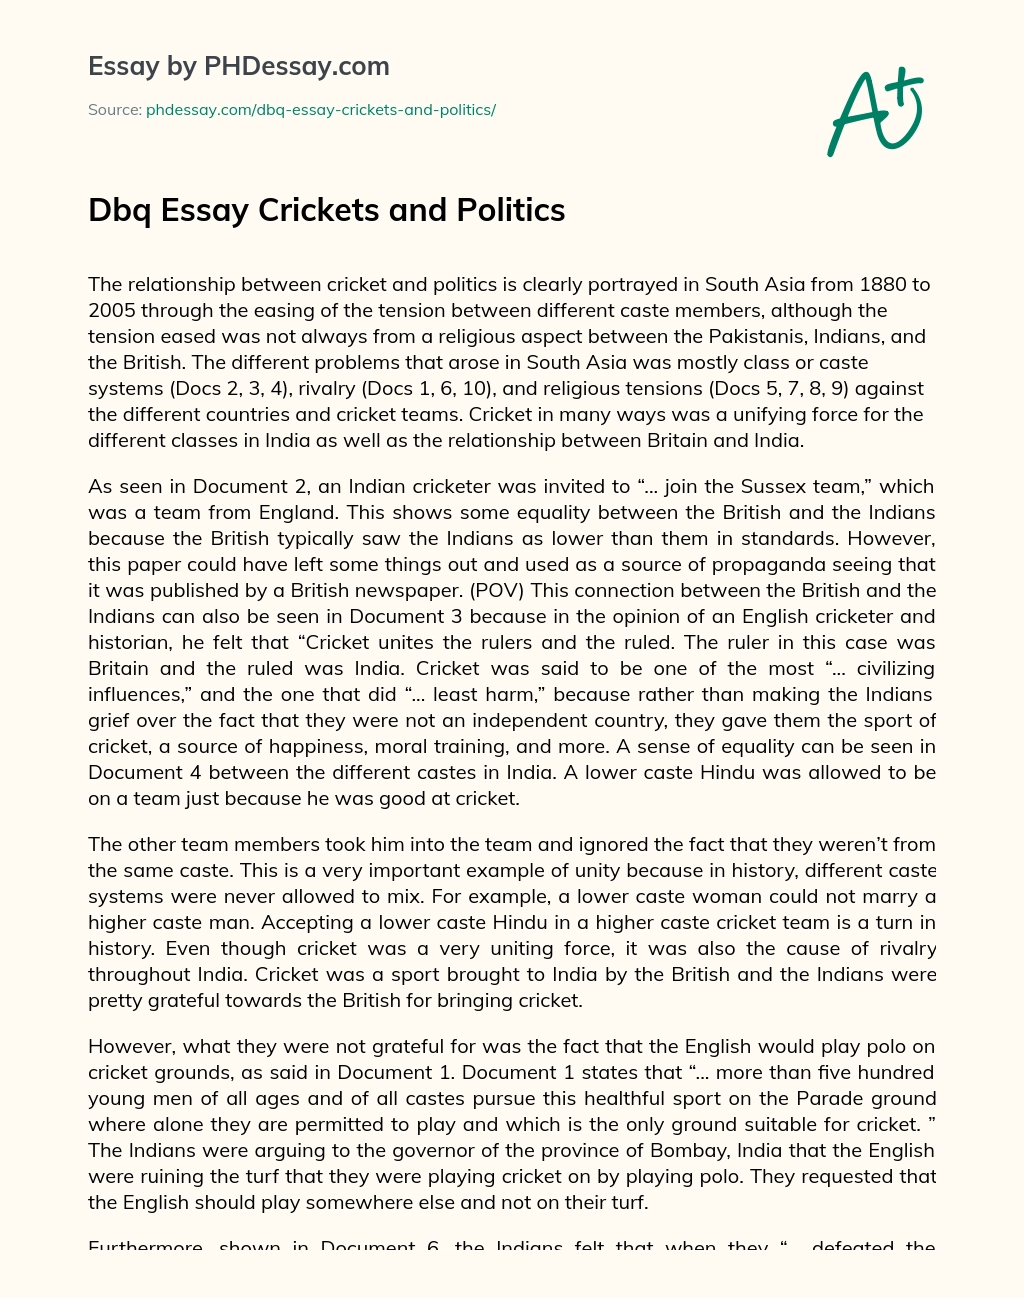 Dbq Essay Crickets and Politics essay